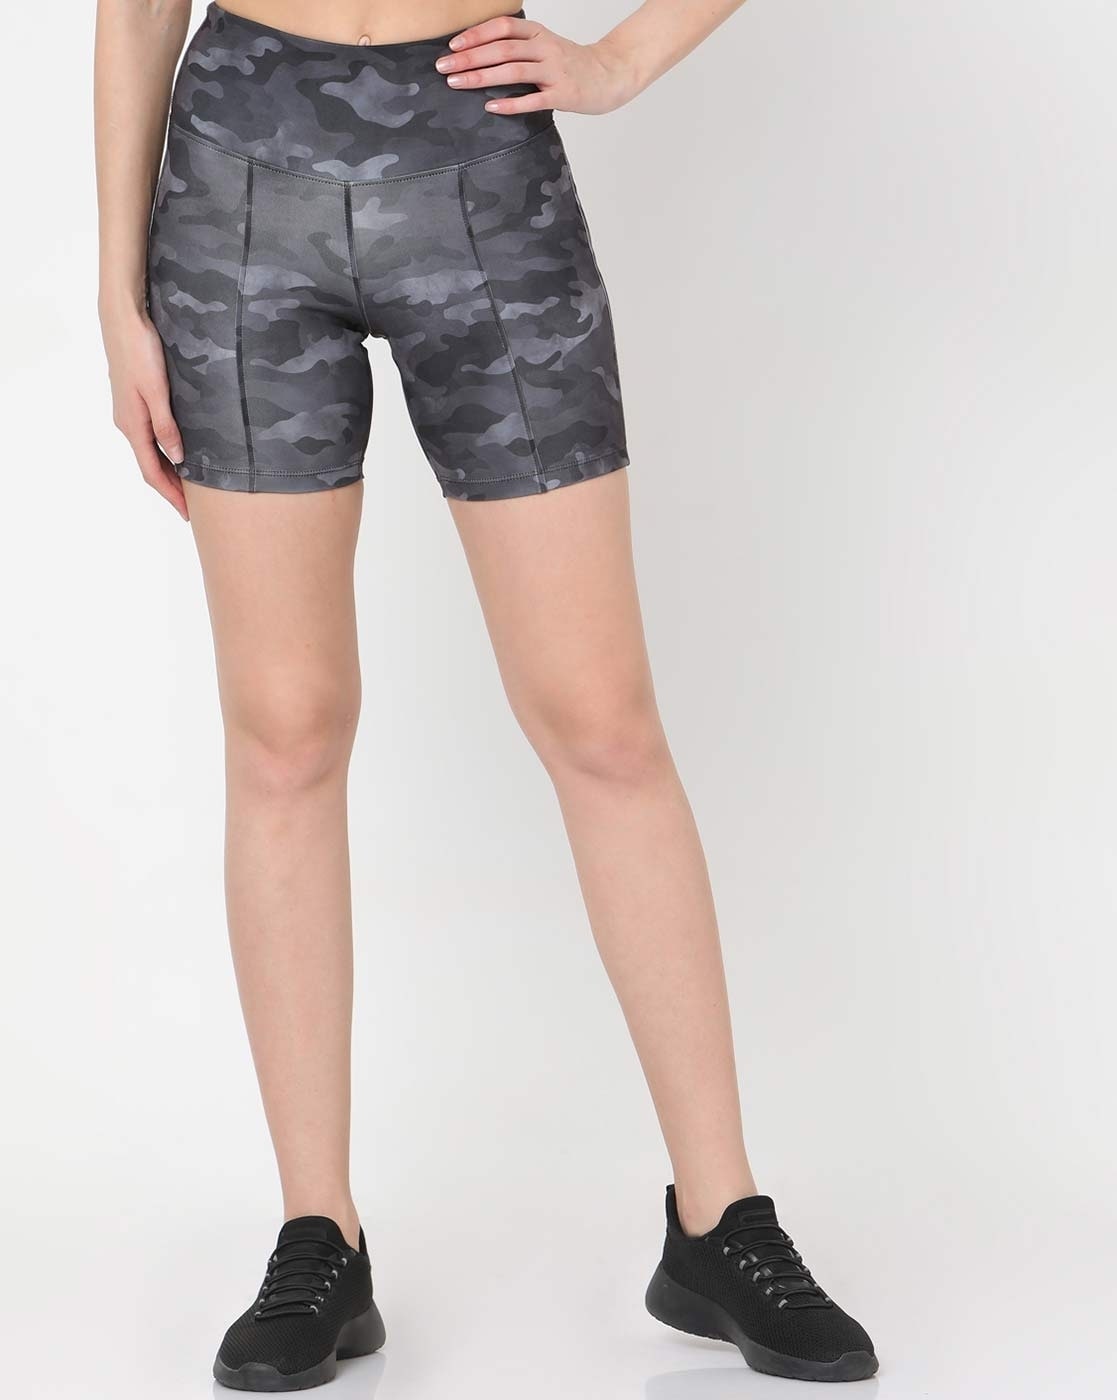 Buy Black Shorts for Women by SILVERTRAQ Online